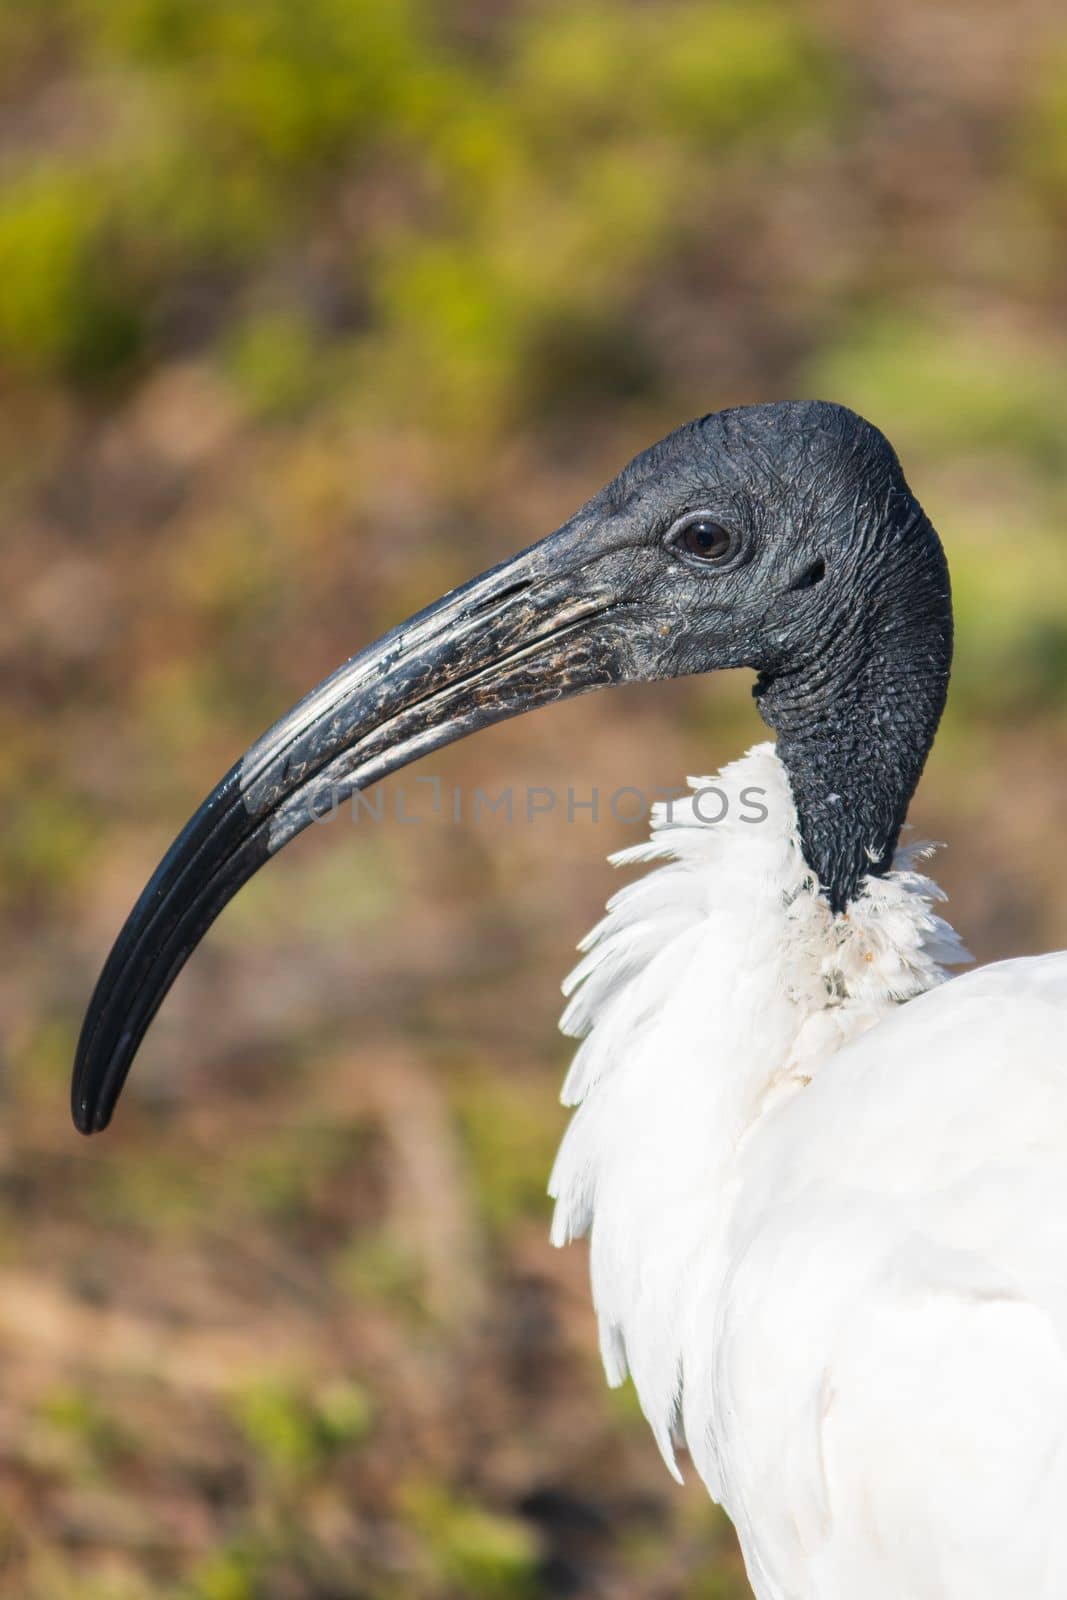 Black headed ibis Threskiornis melanocephalus close up. by senkaya